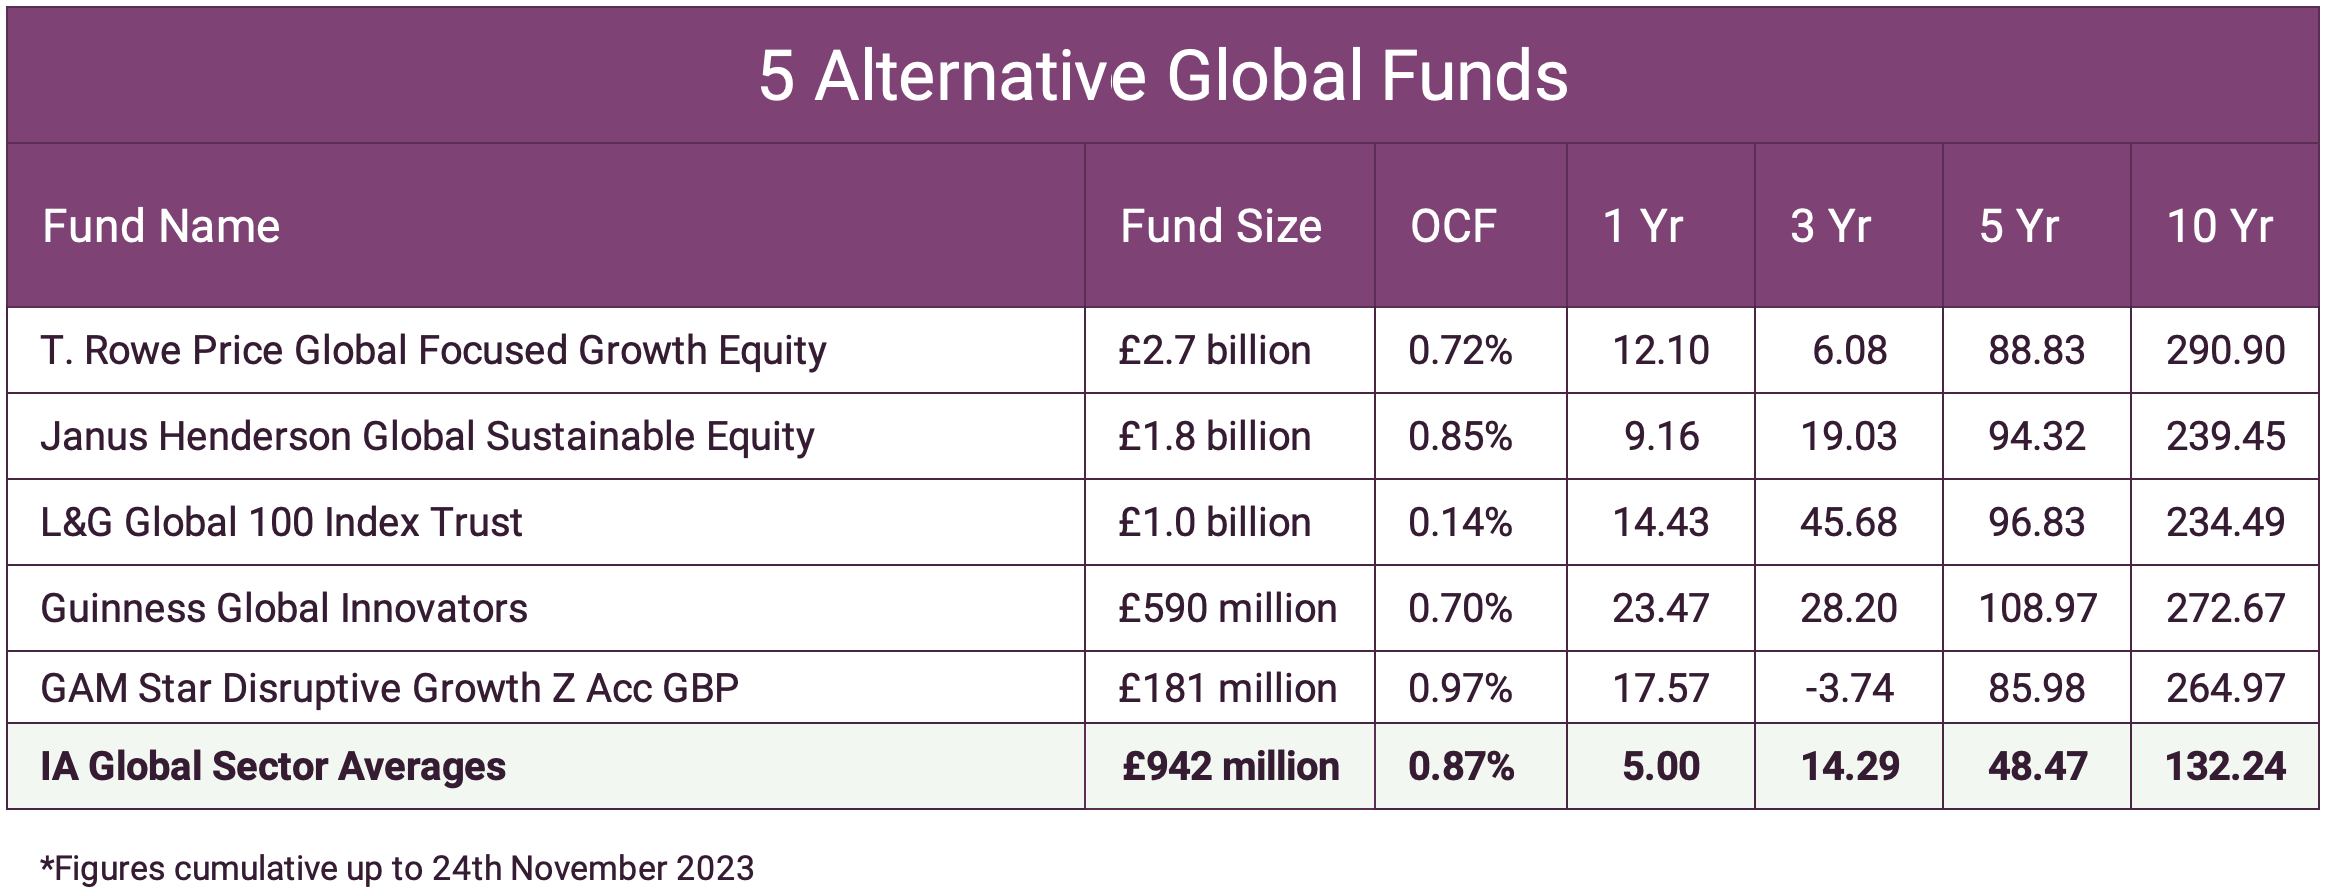 5 Alternative Global Funds